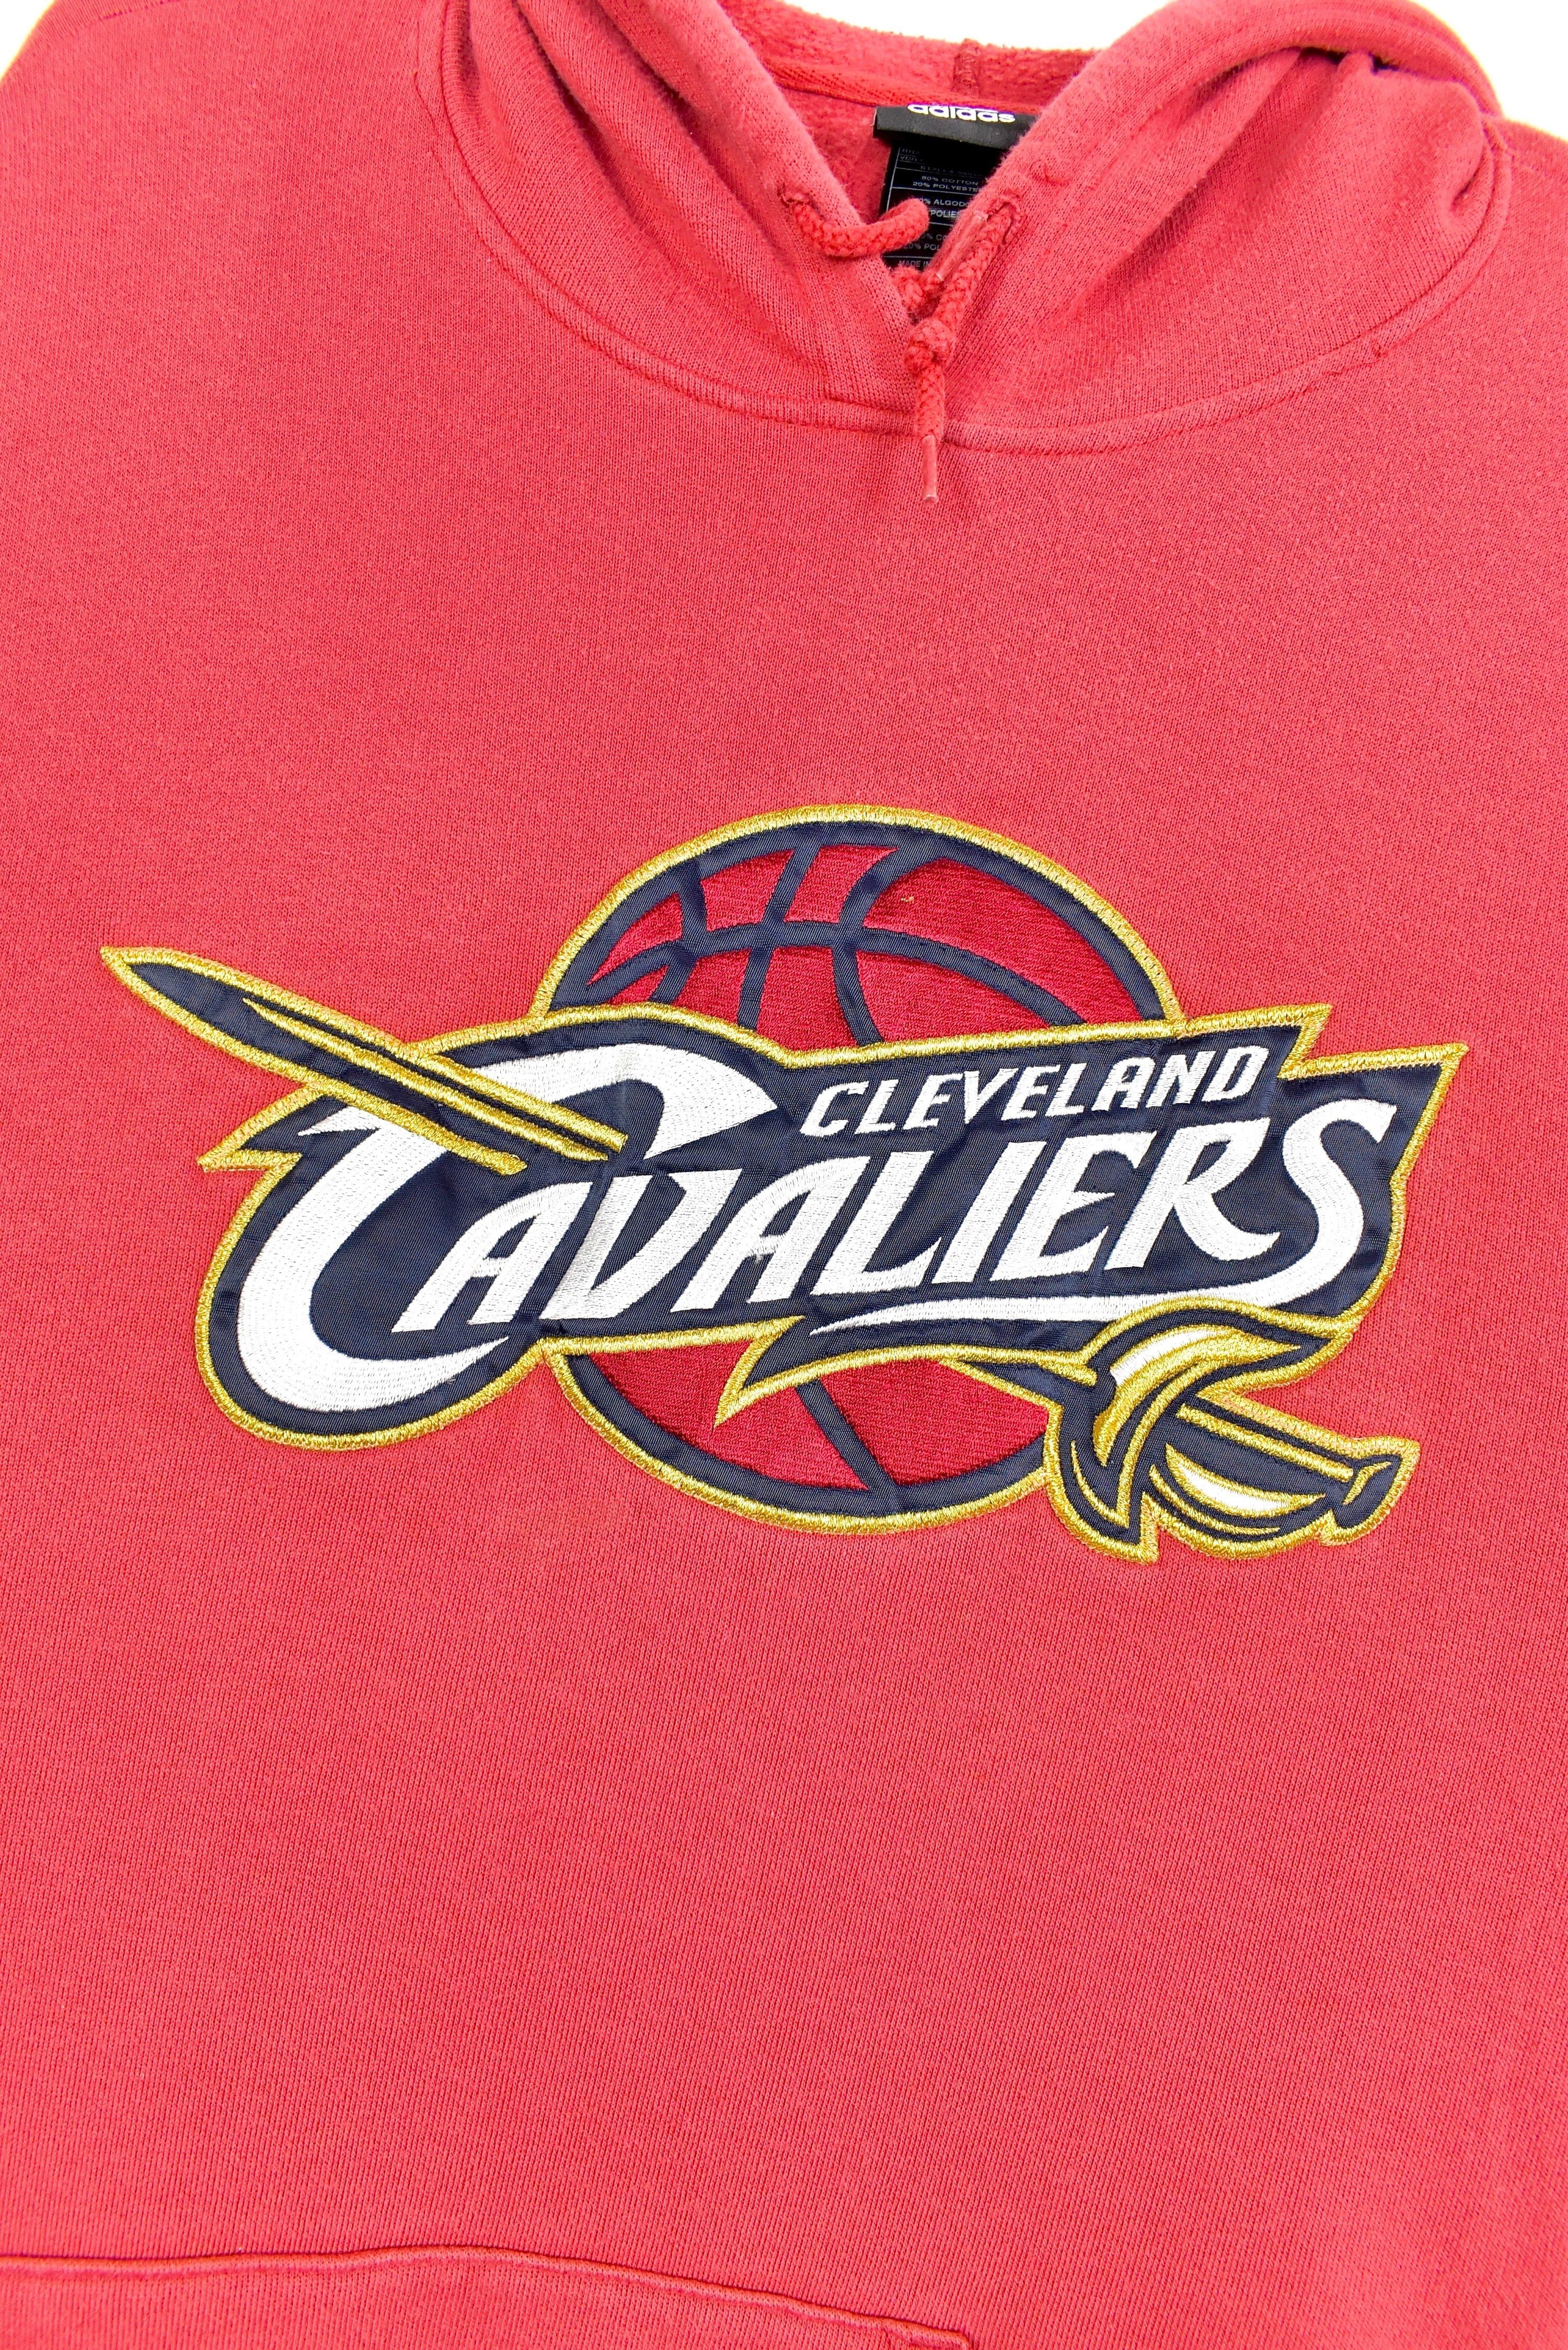 Cleveland Cavaliers Sweatshirt 